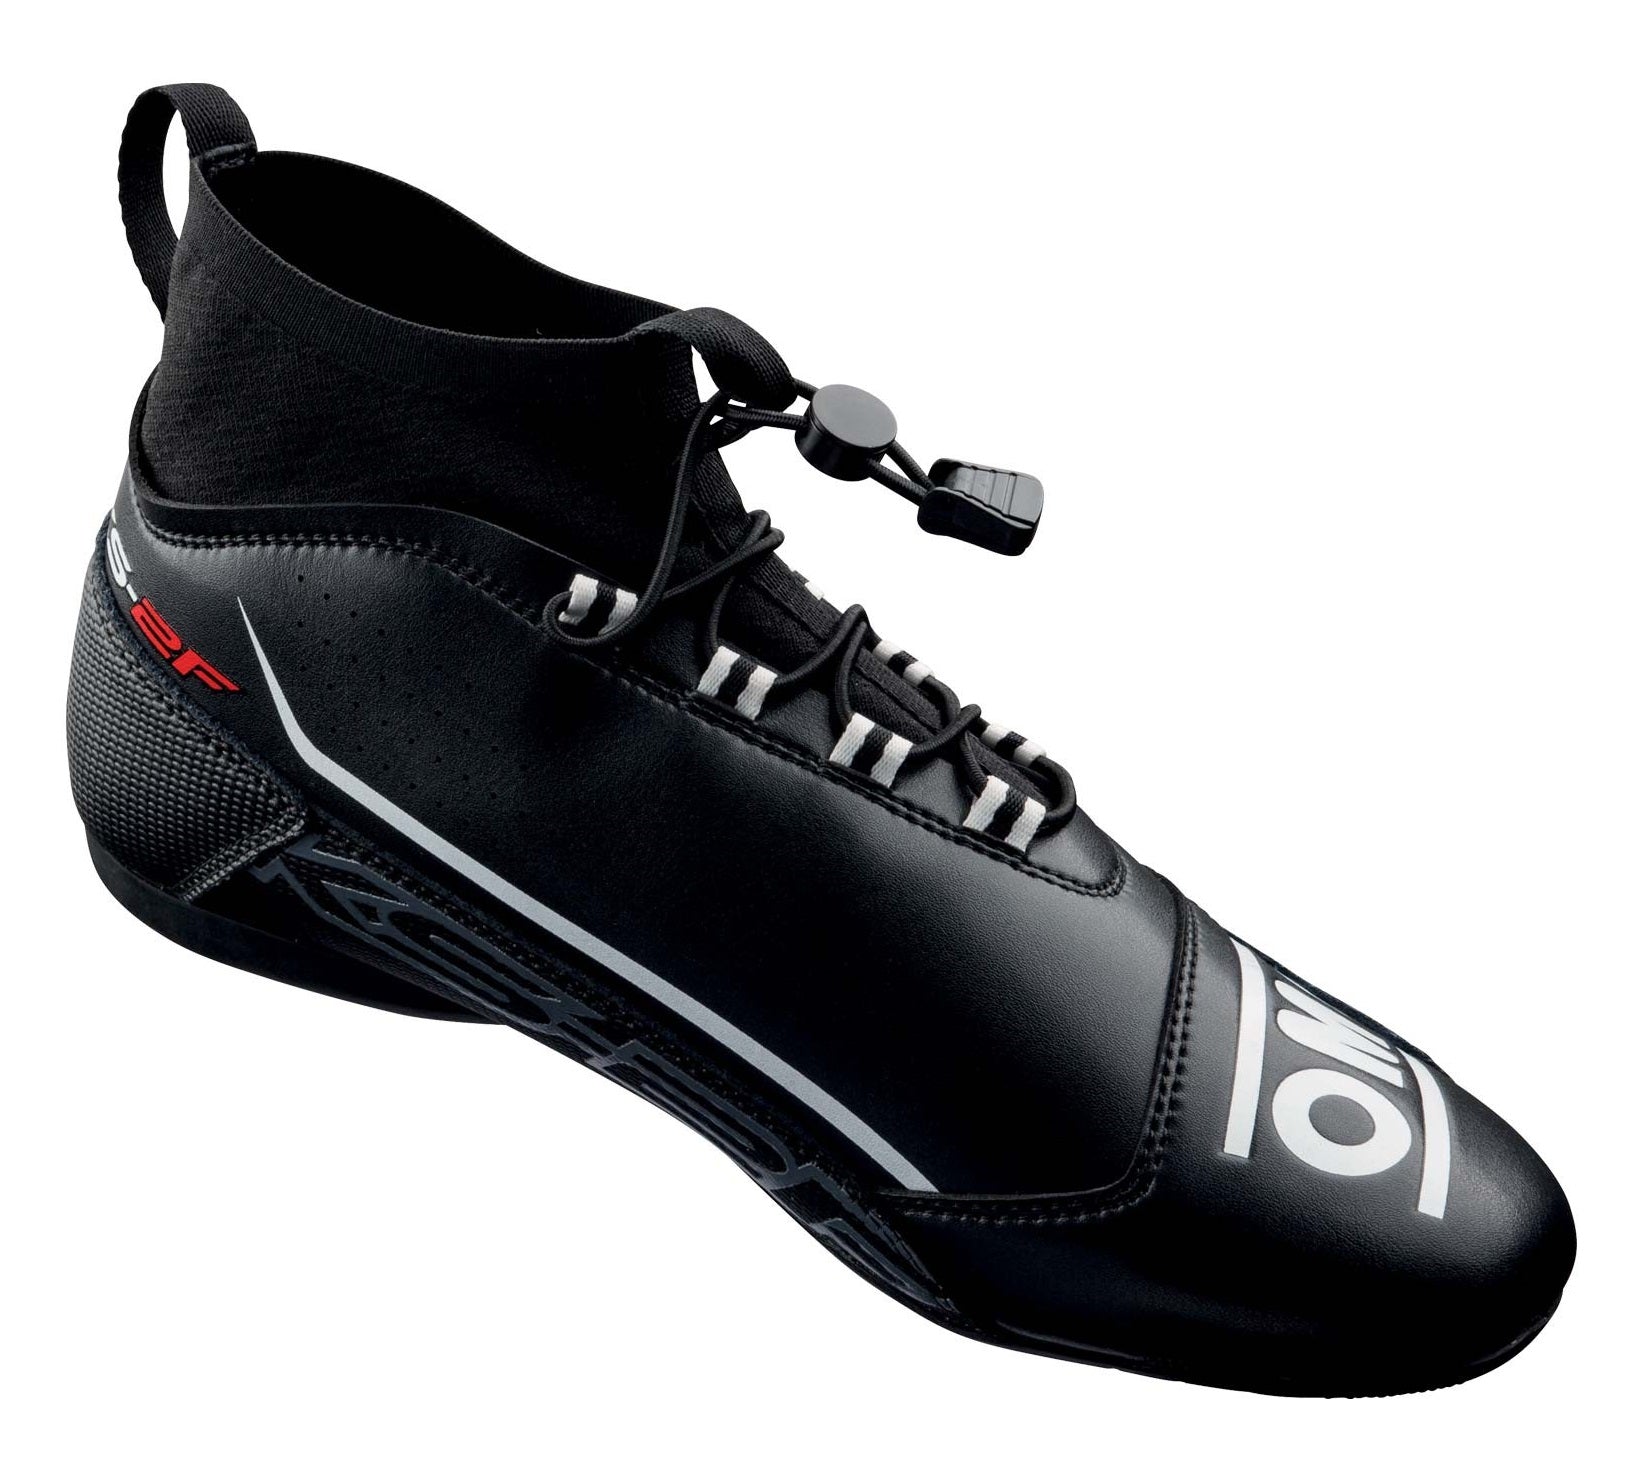 OMP KC0-0830-A01-071-37 KS-2F Karting shoes, black, size 37 Photo-1 